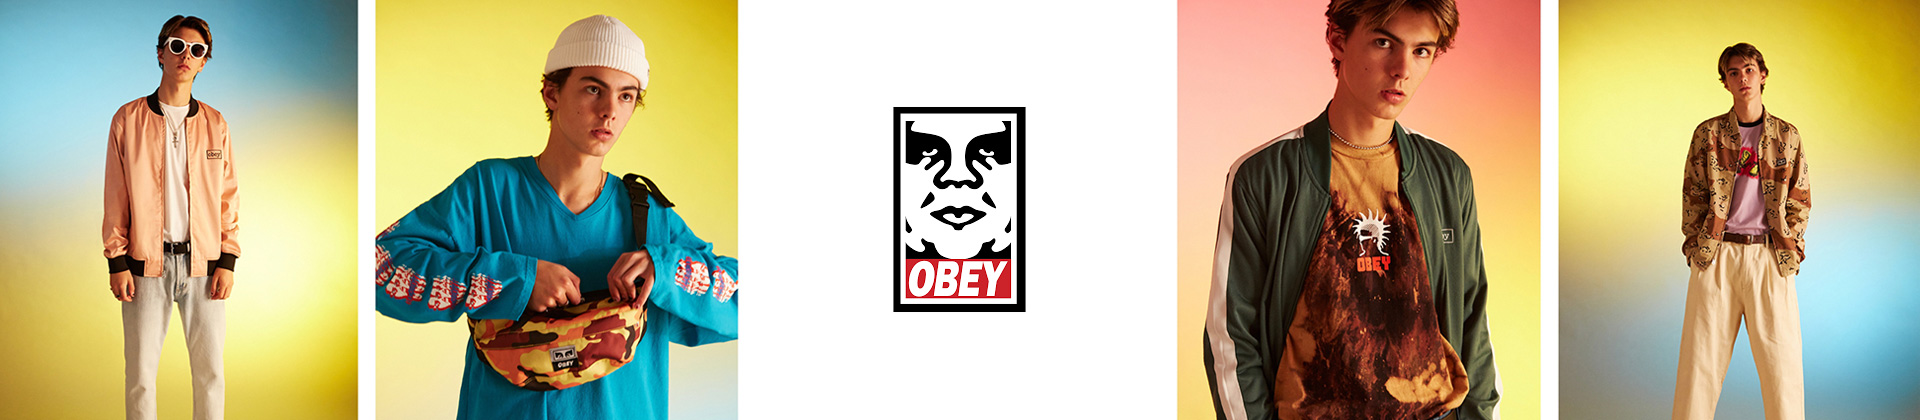 obey_190903.jpg